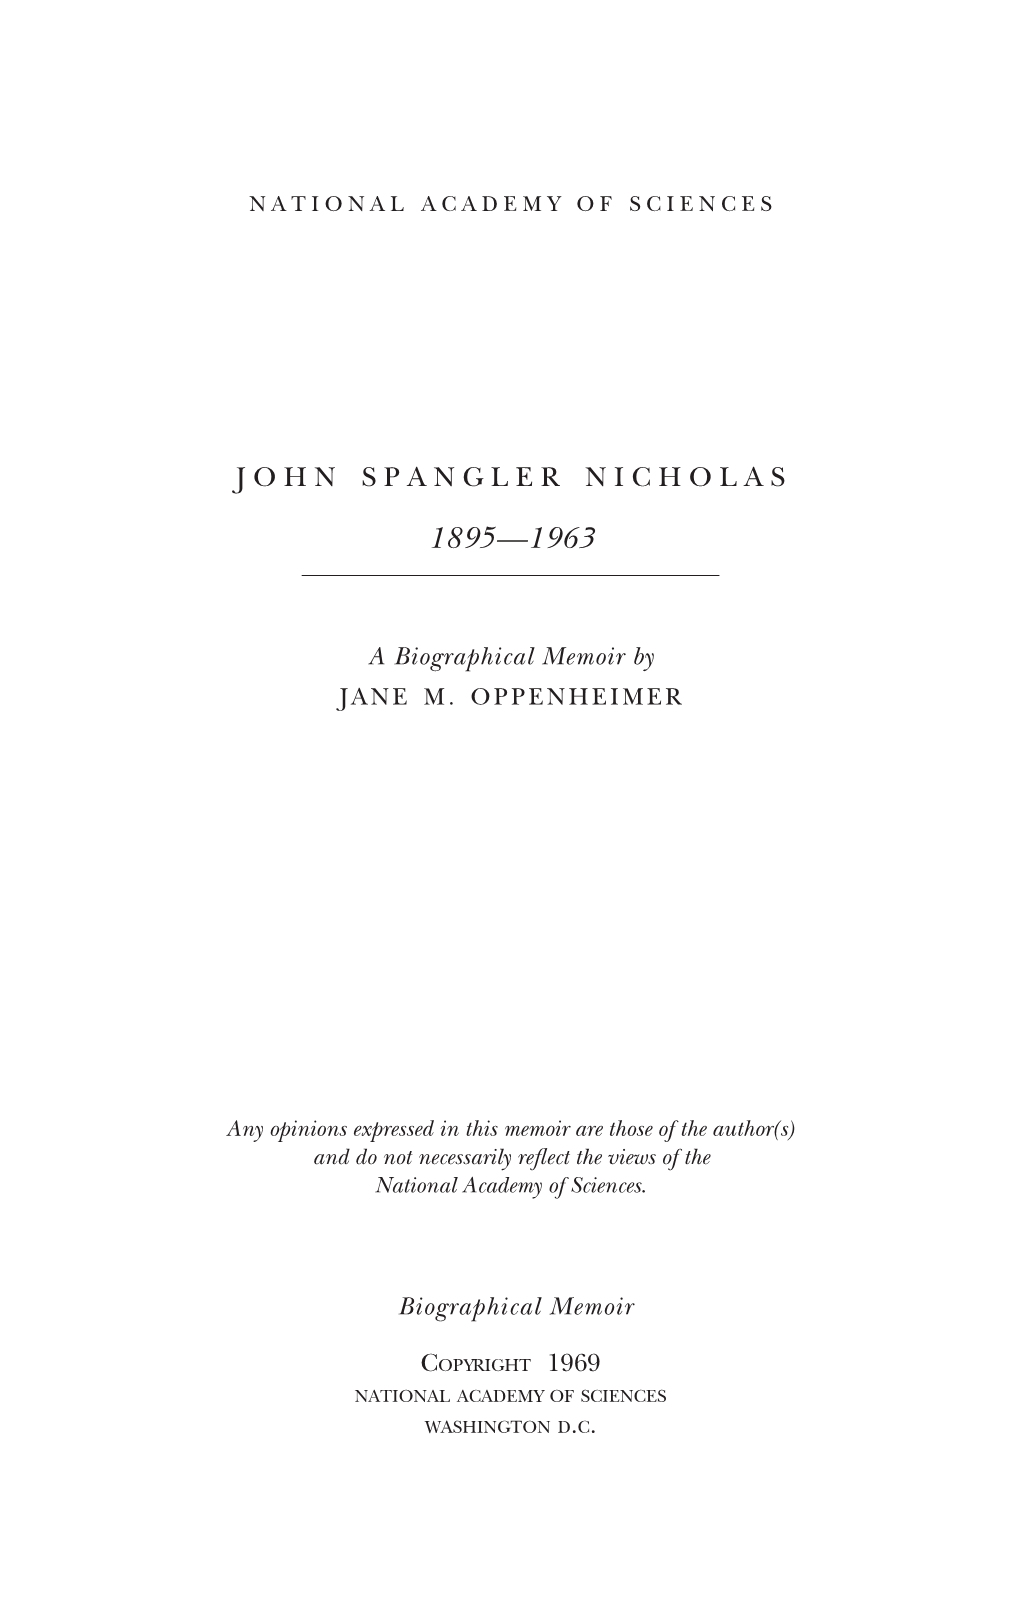 John Spangler Nicholas